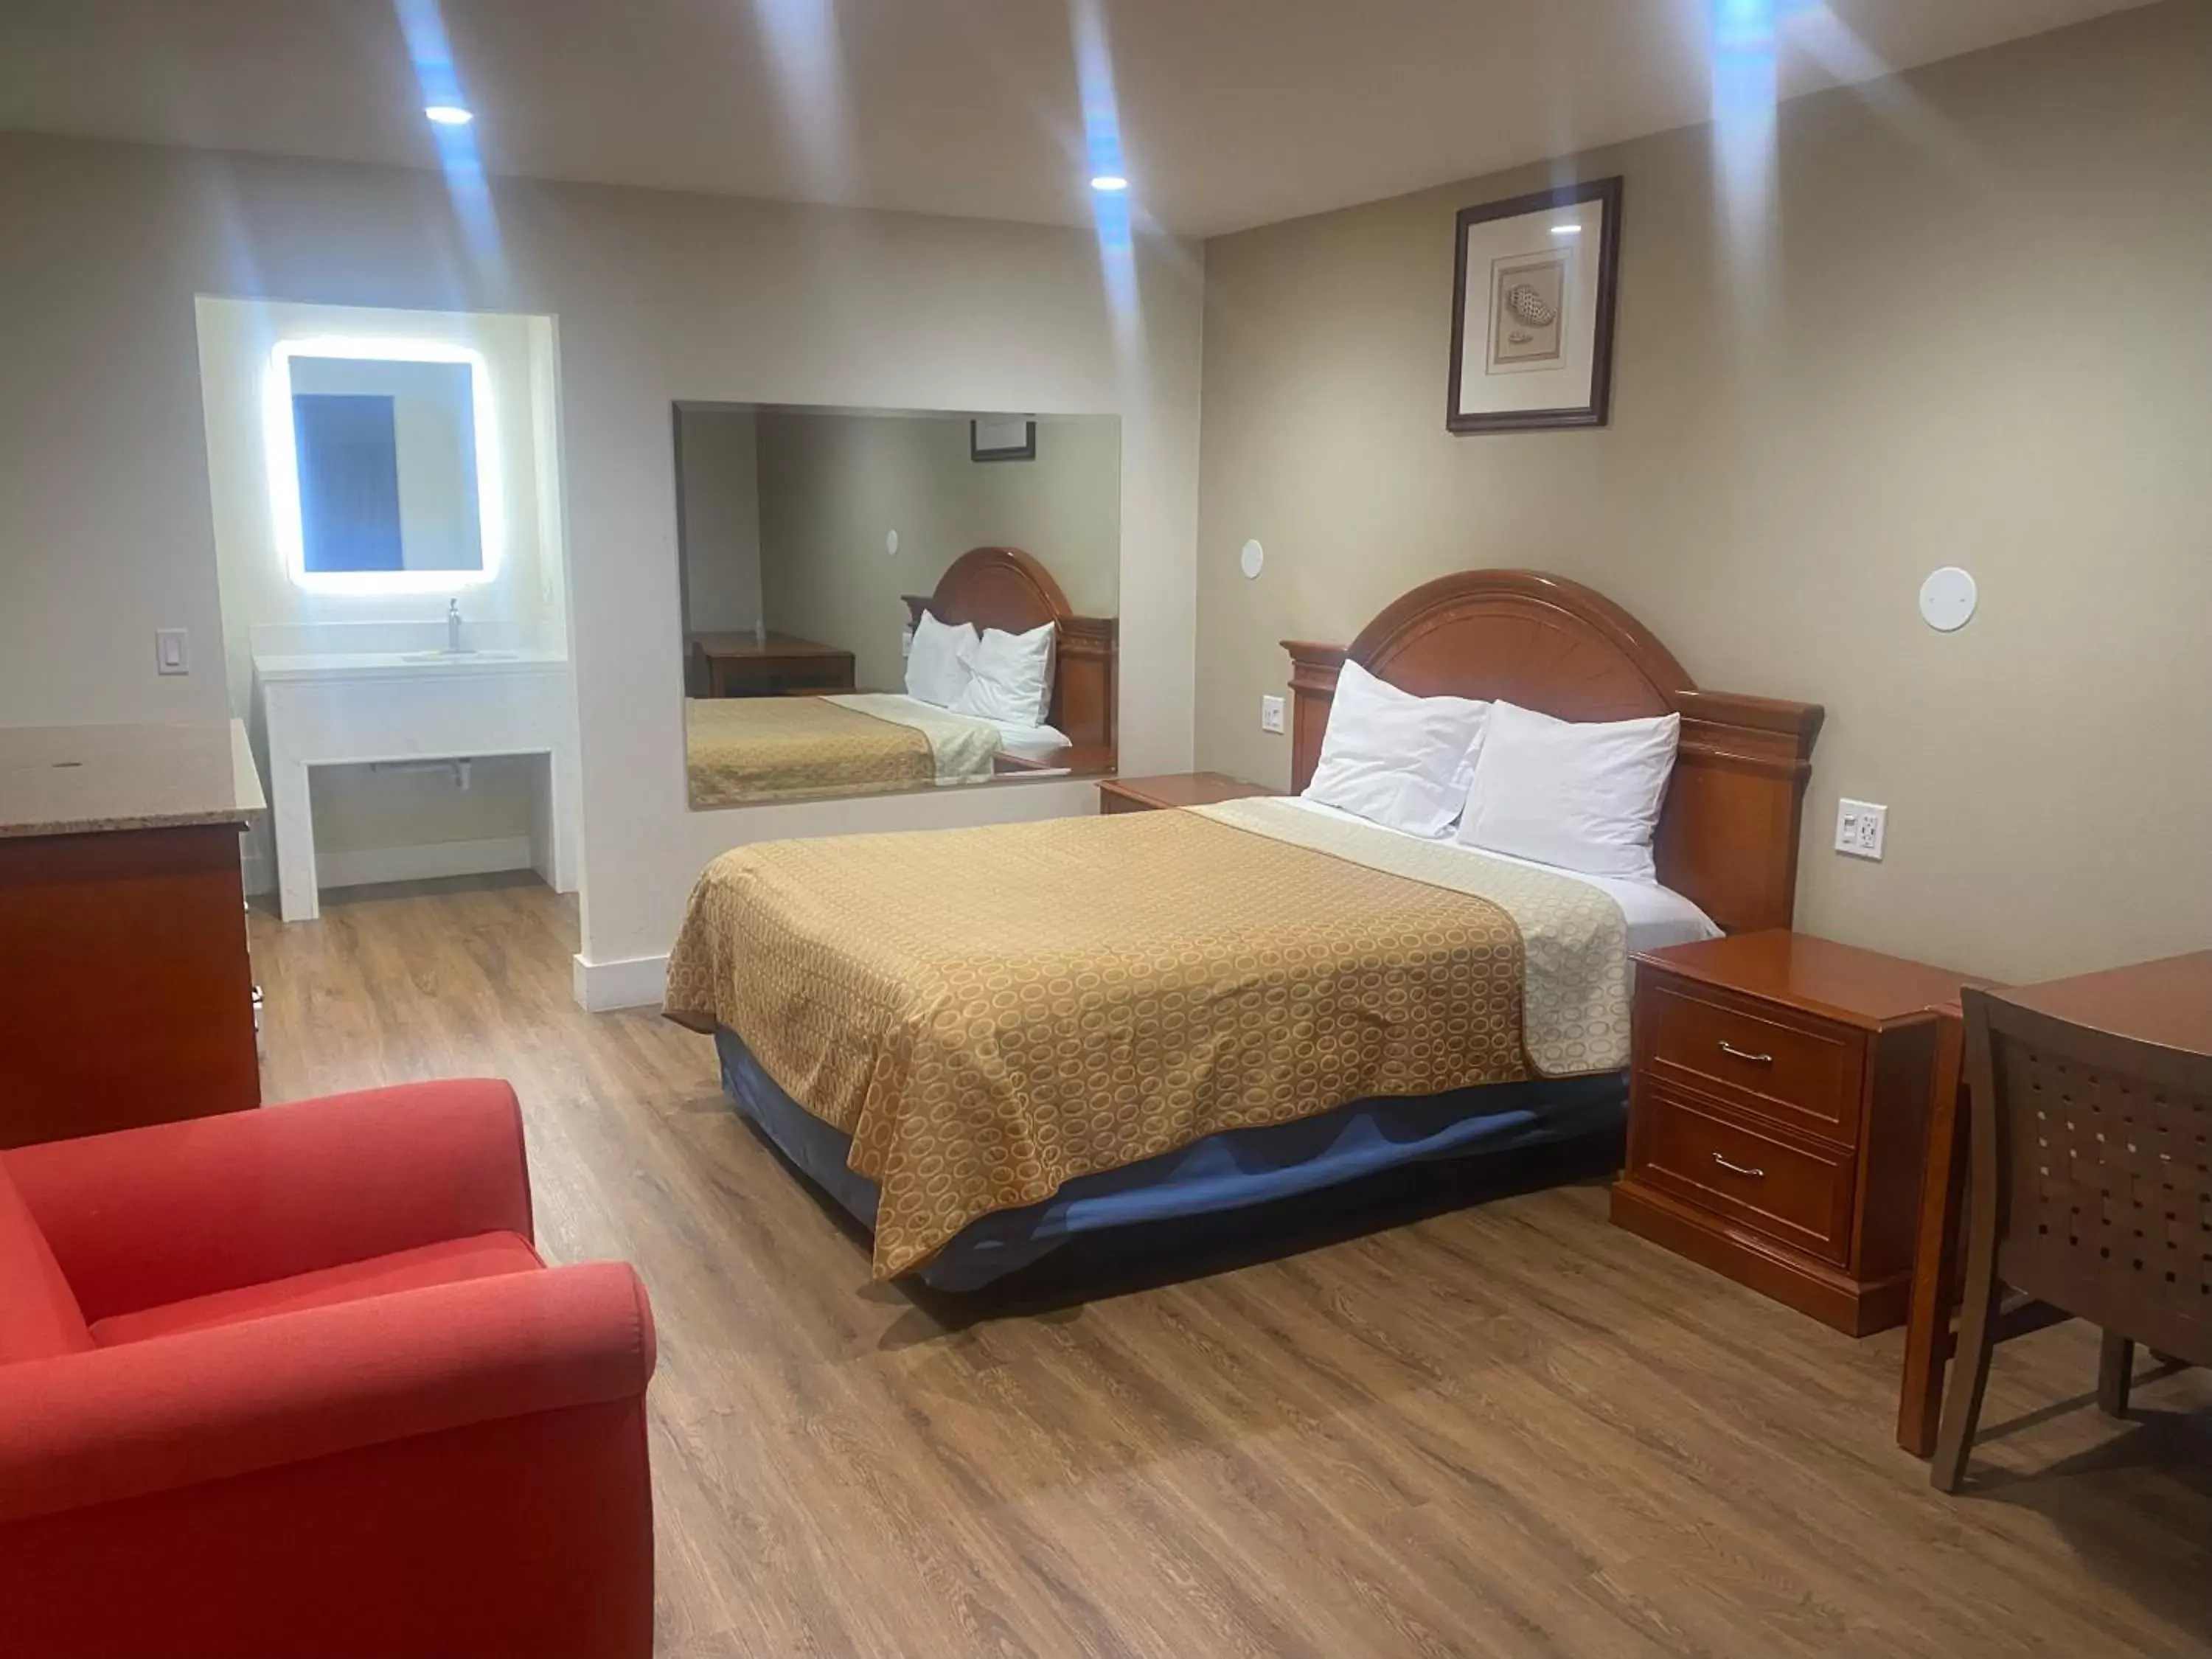 Bed in Royale Inn Motel